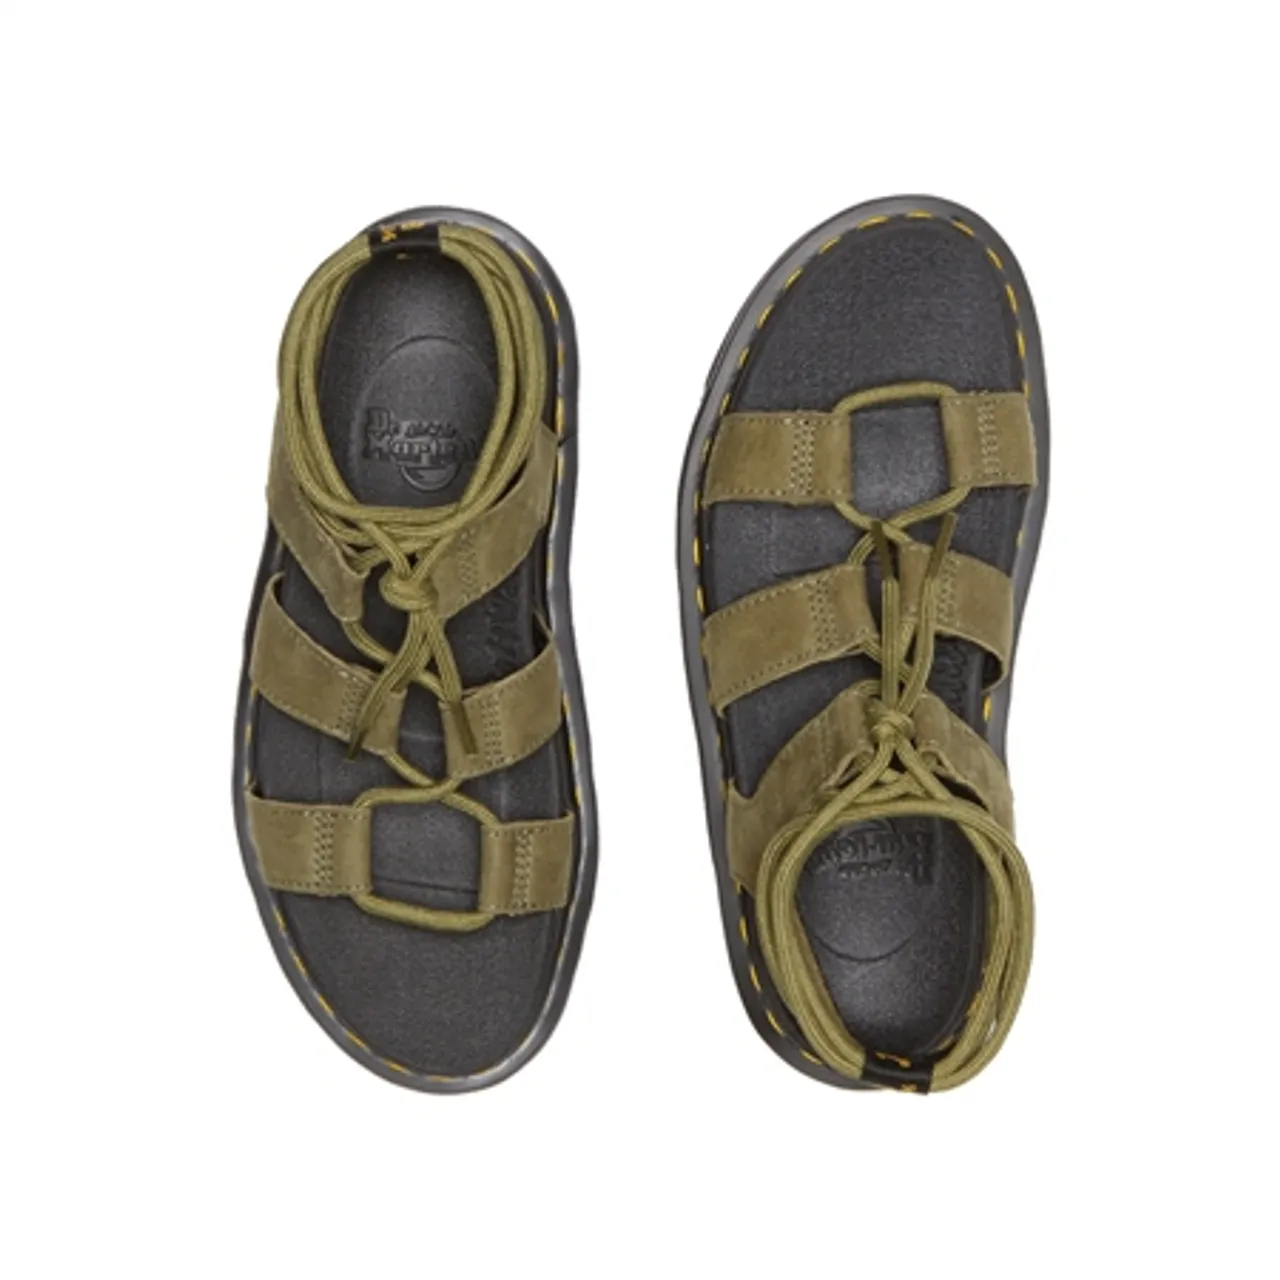 Dr Martens Nartilla Tumbled Nubuck Lace Up Gladiator Sandals - Muted Olive - UK 4 (EU 37)